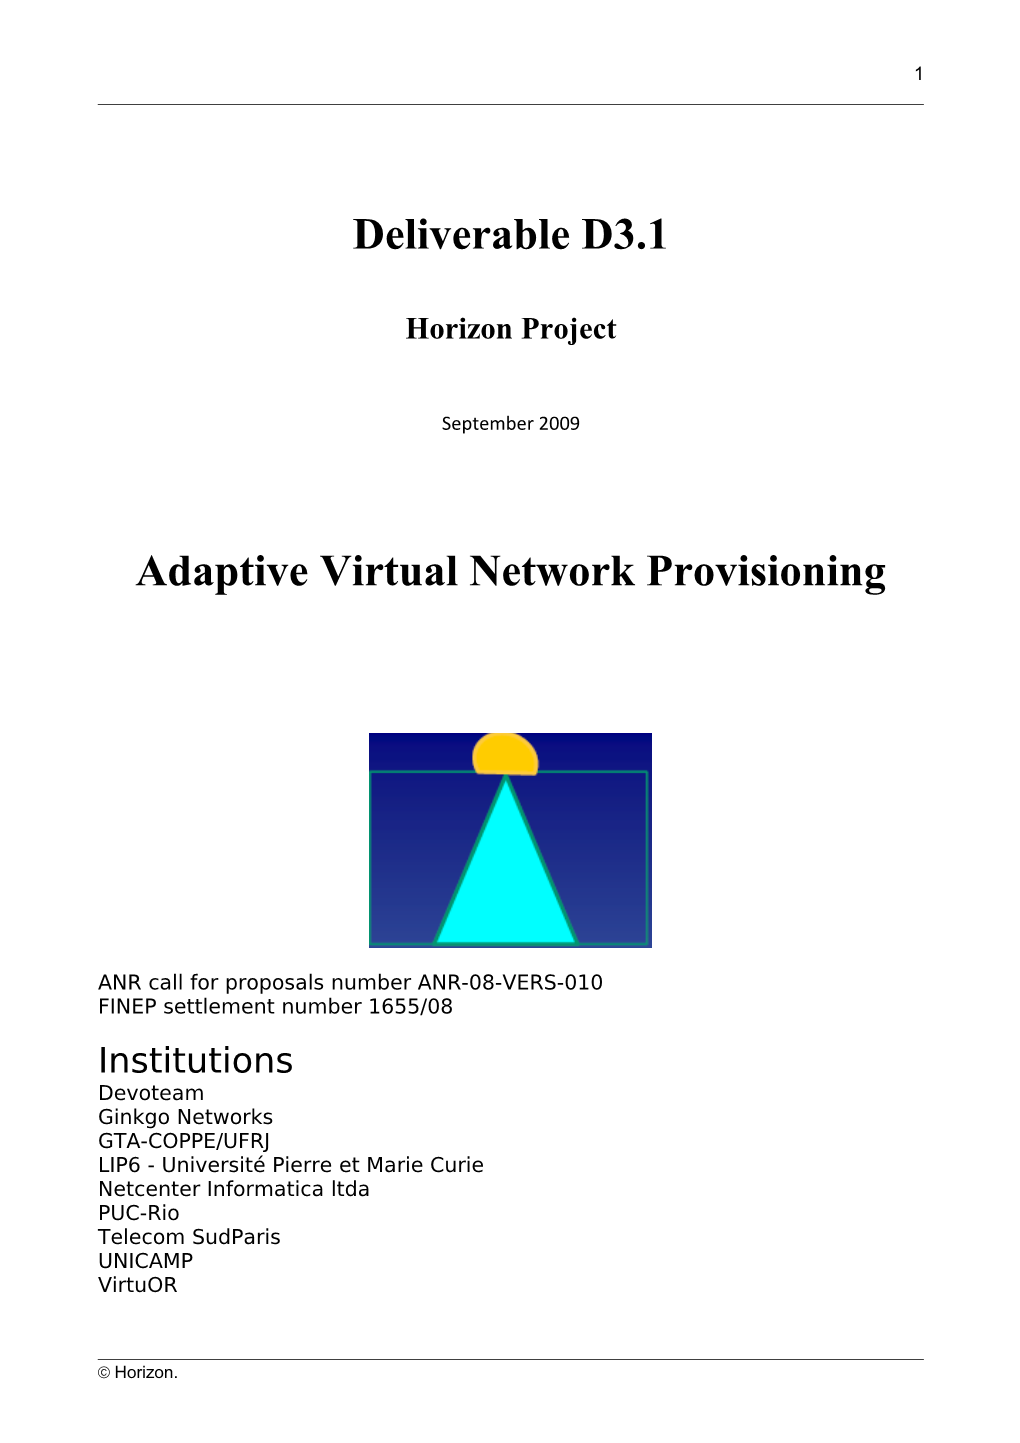 Adaptive Virtual Network Provisioning